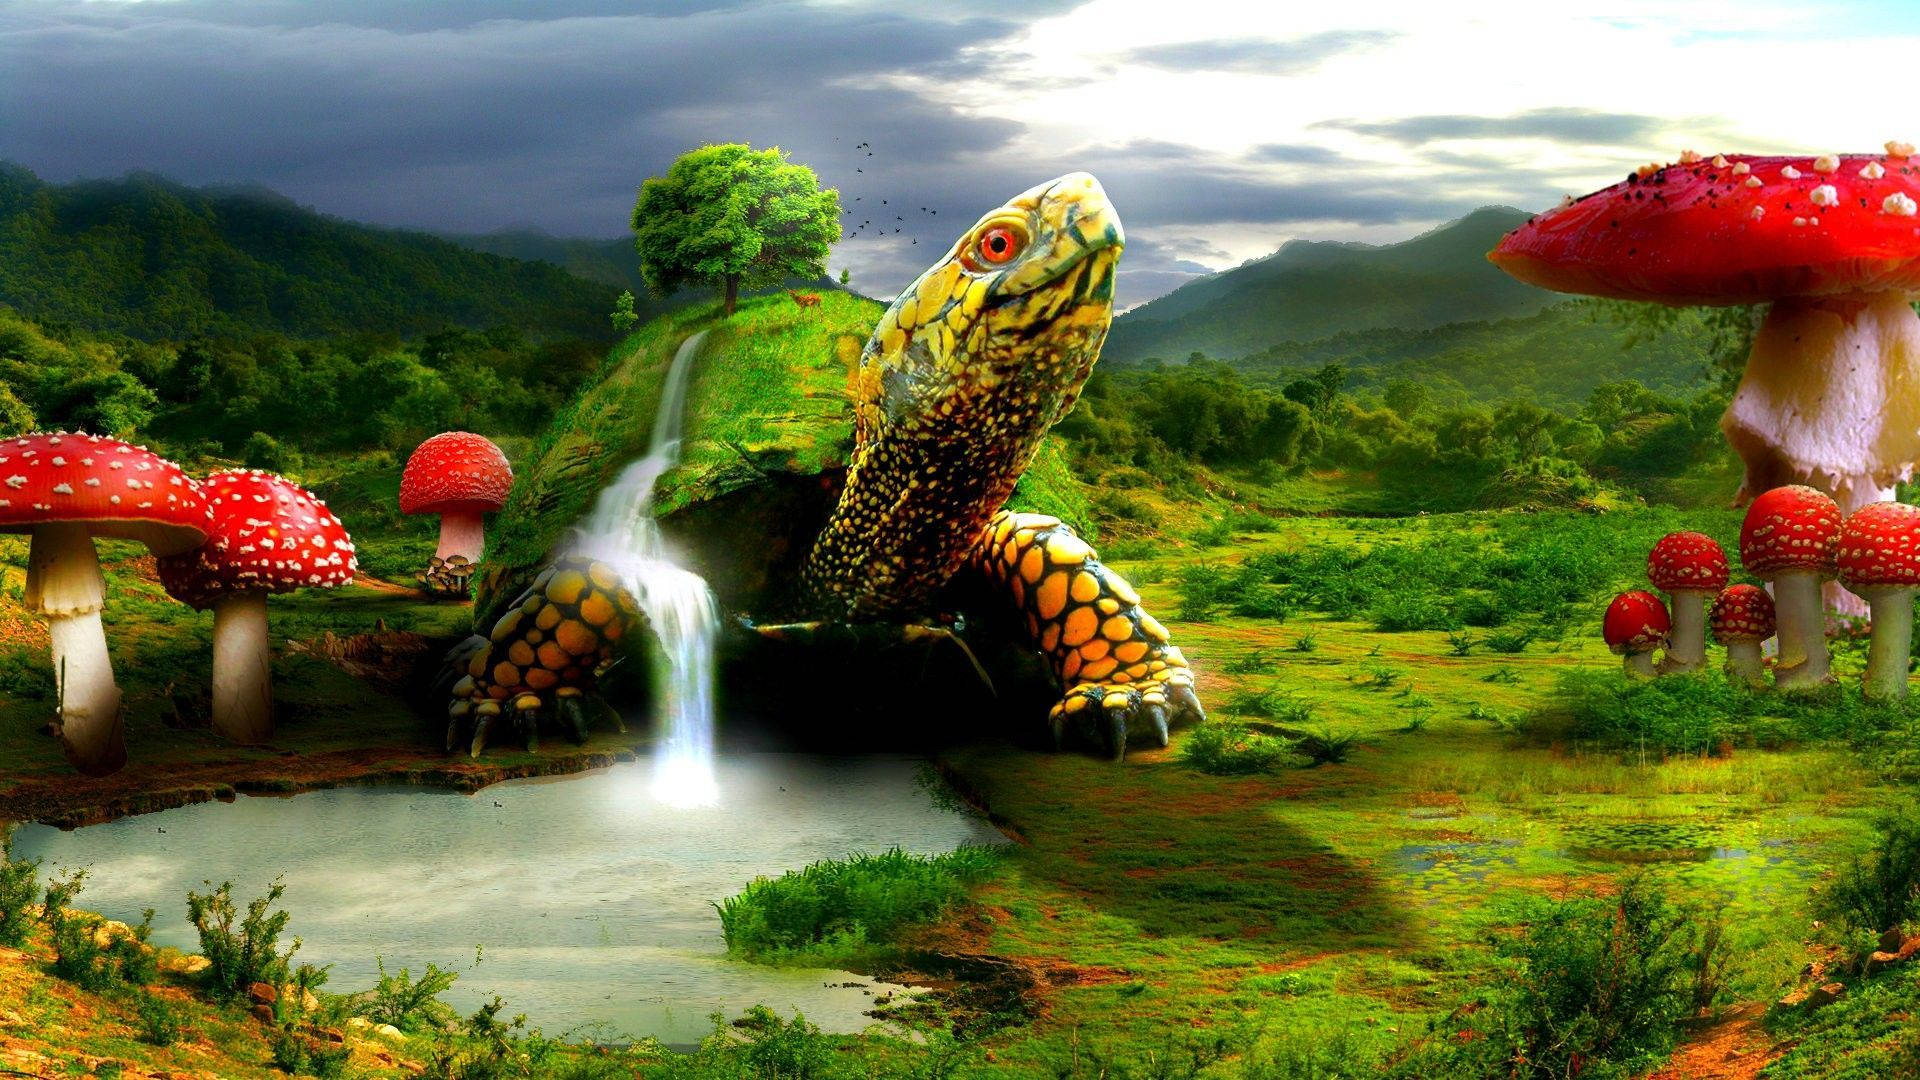 Cool Turtle Digital Fantasy Background